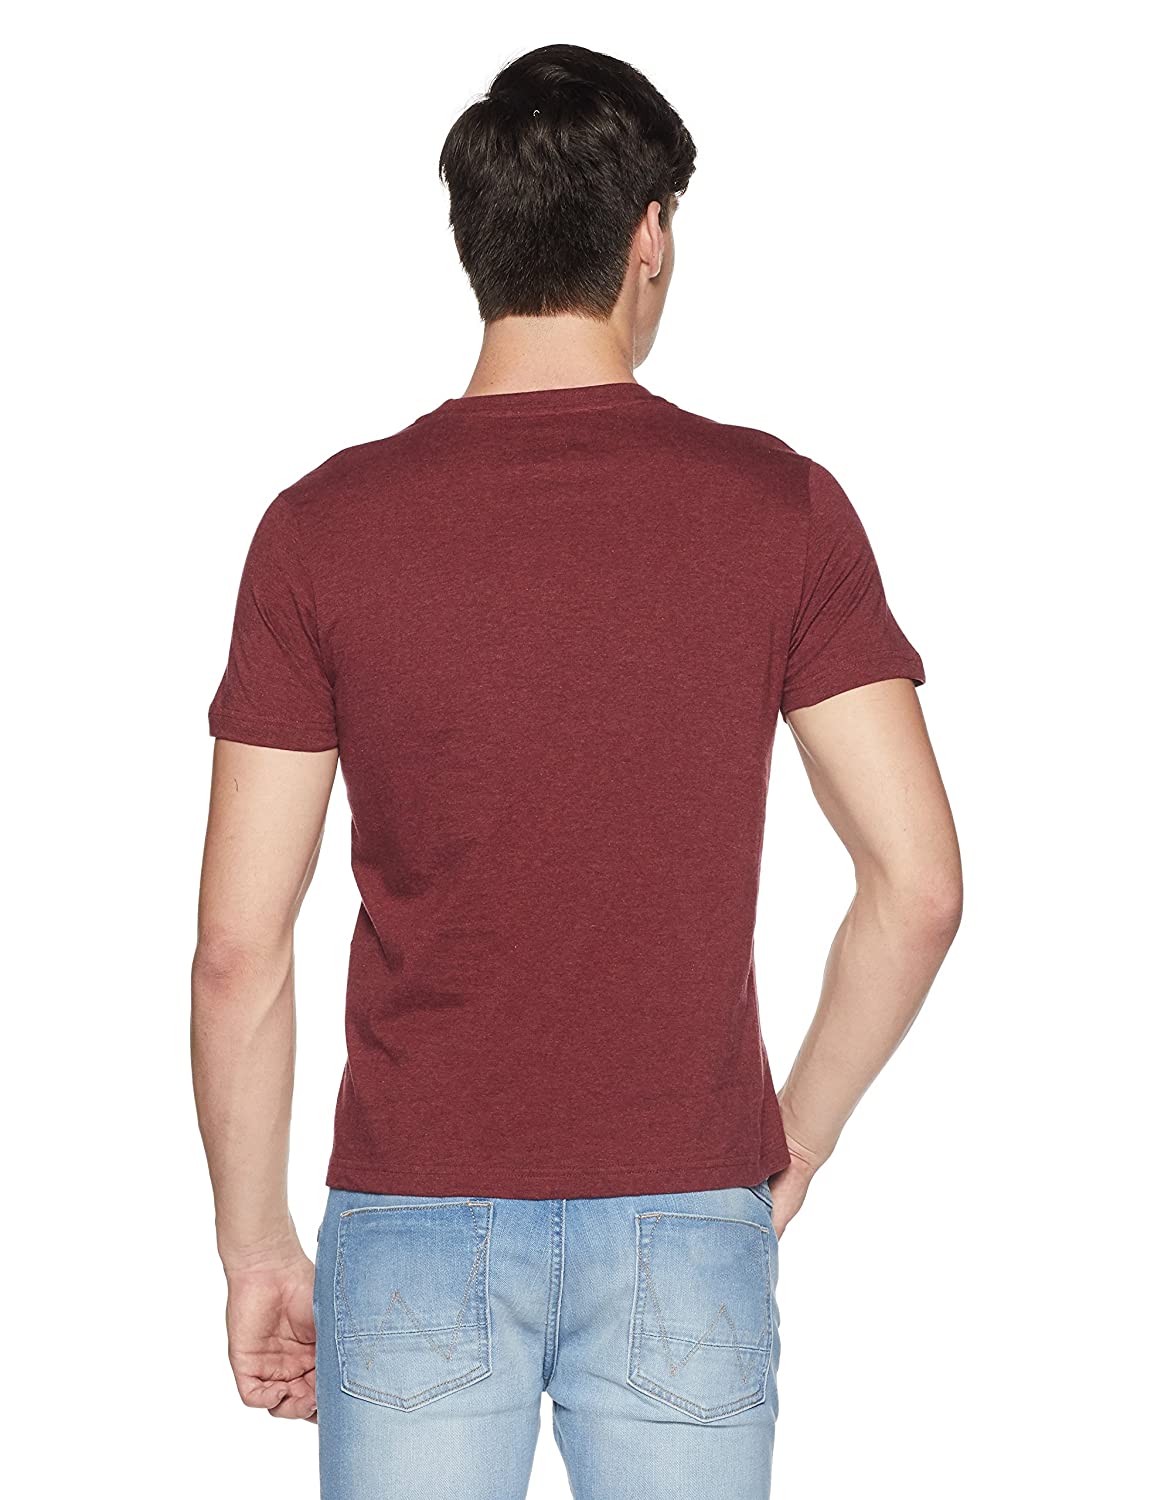 U.S. Polo Assn. Men's Maroon Cotton Regular Fit T-Shirt - Stilento